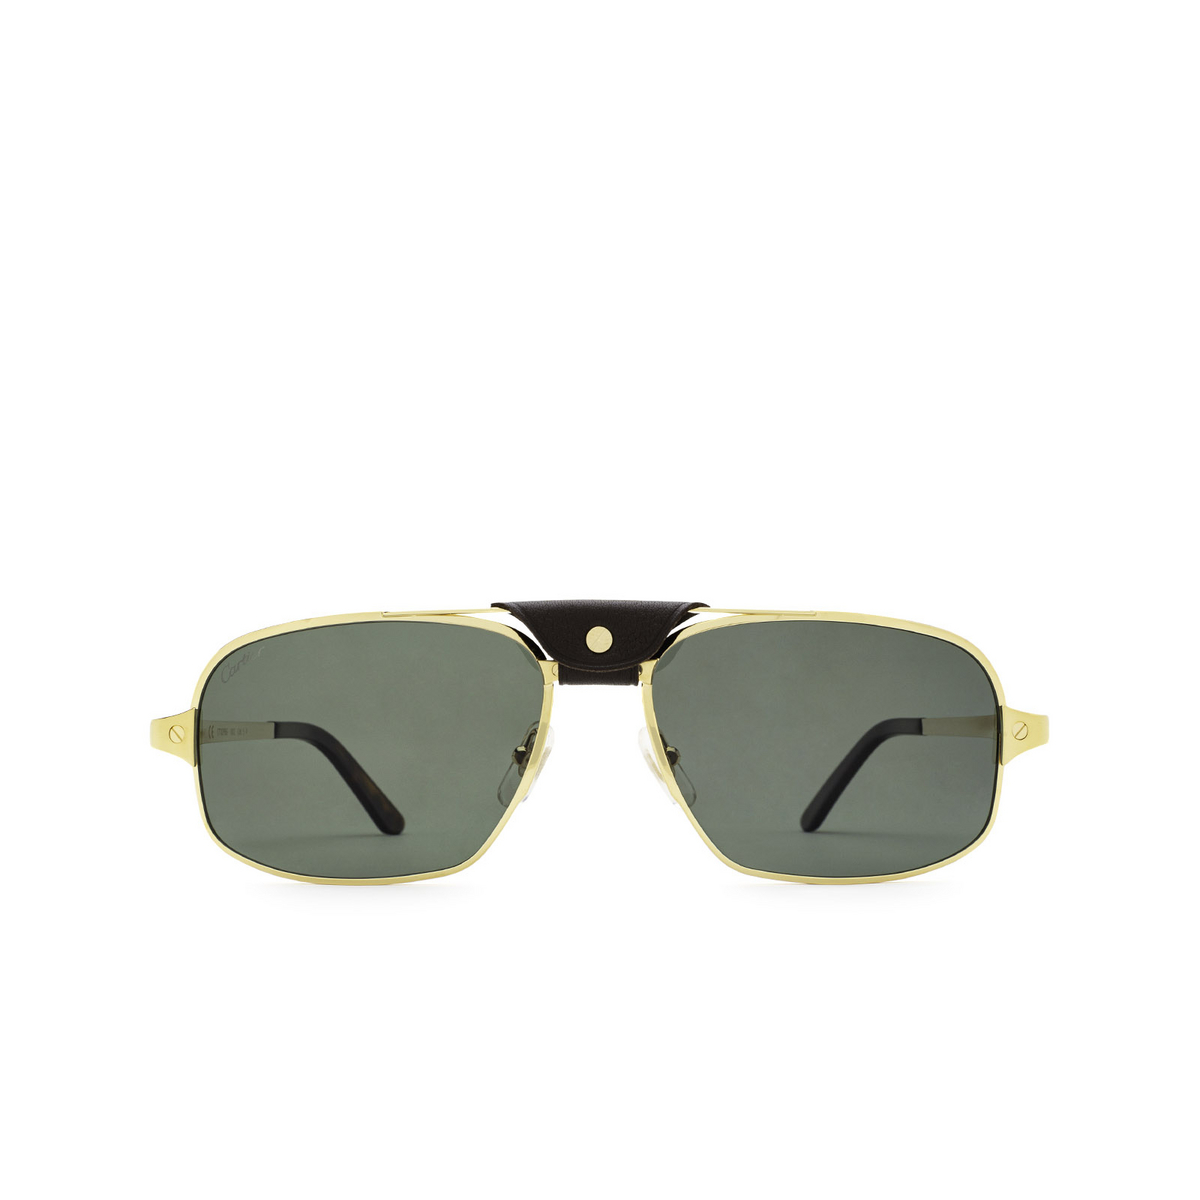 Cartier sunglasses - Mia Burton